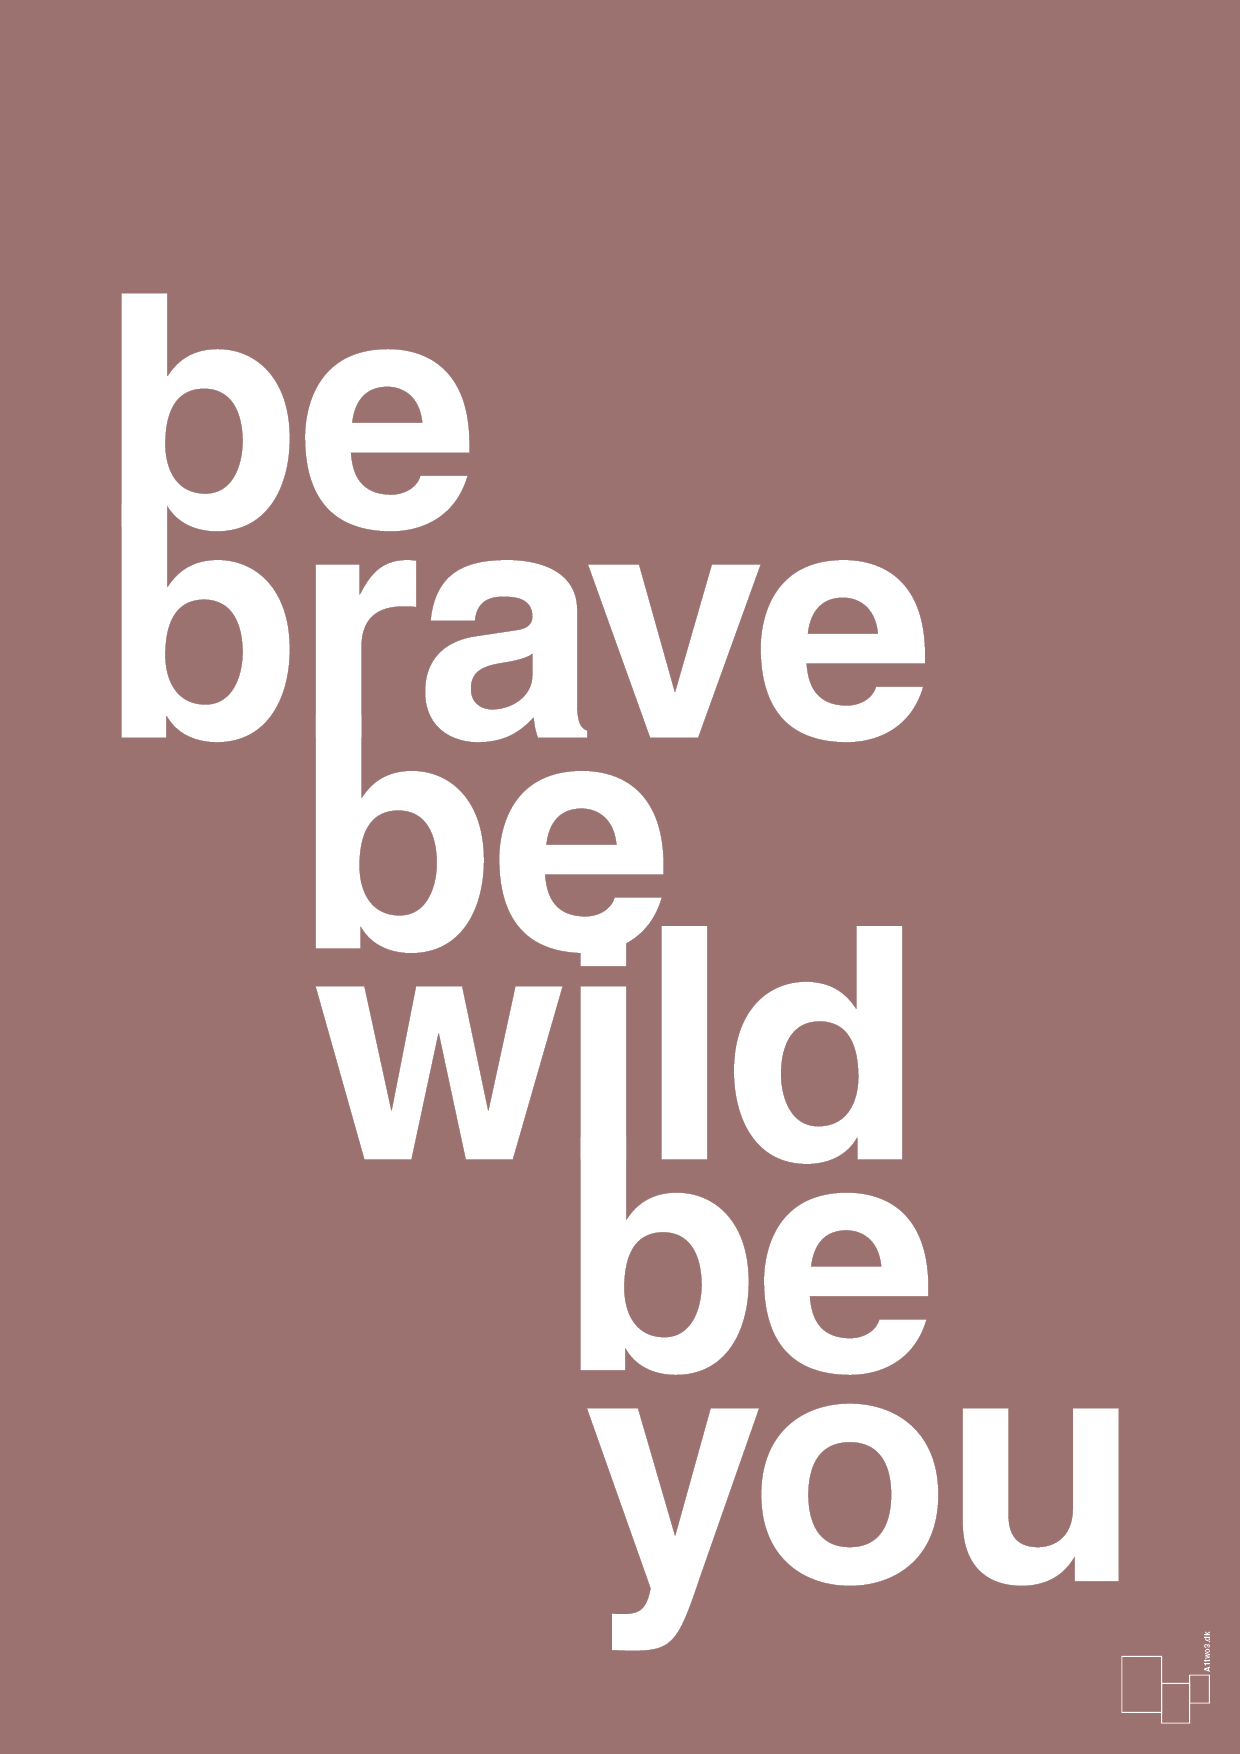 be brave be wild be you - Plakat med Ordsprog i Plum